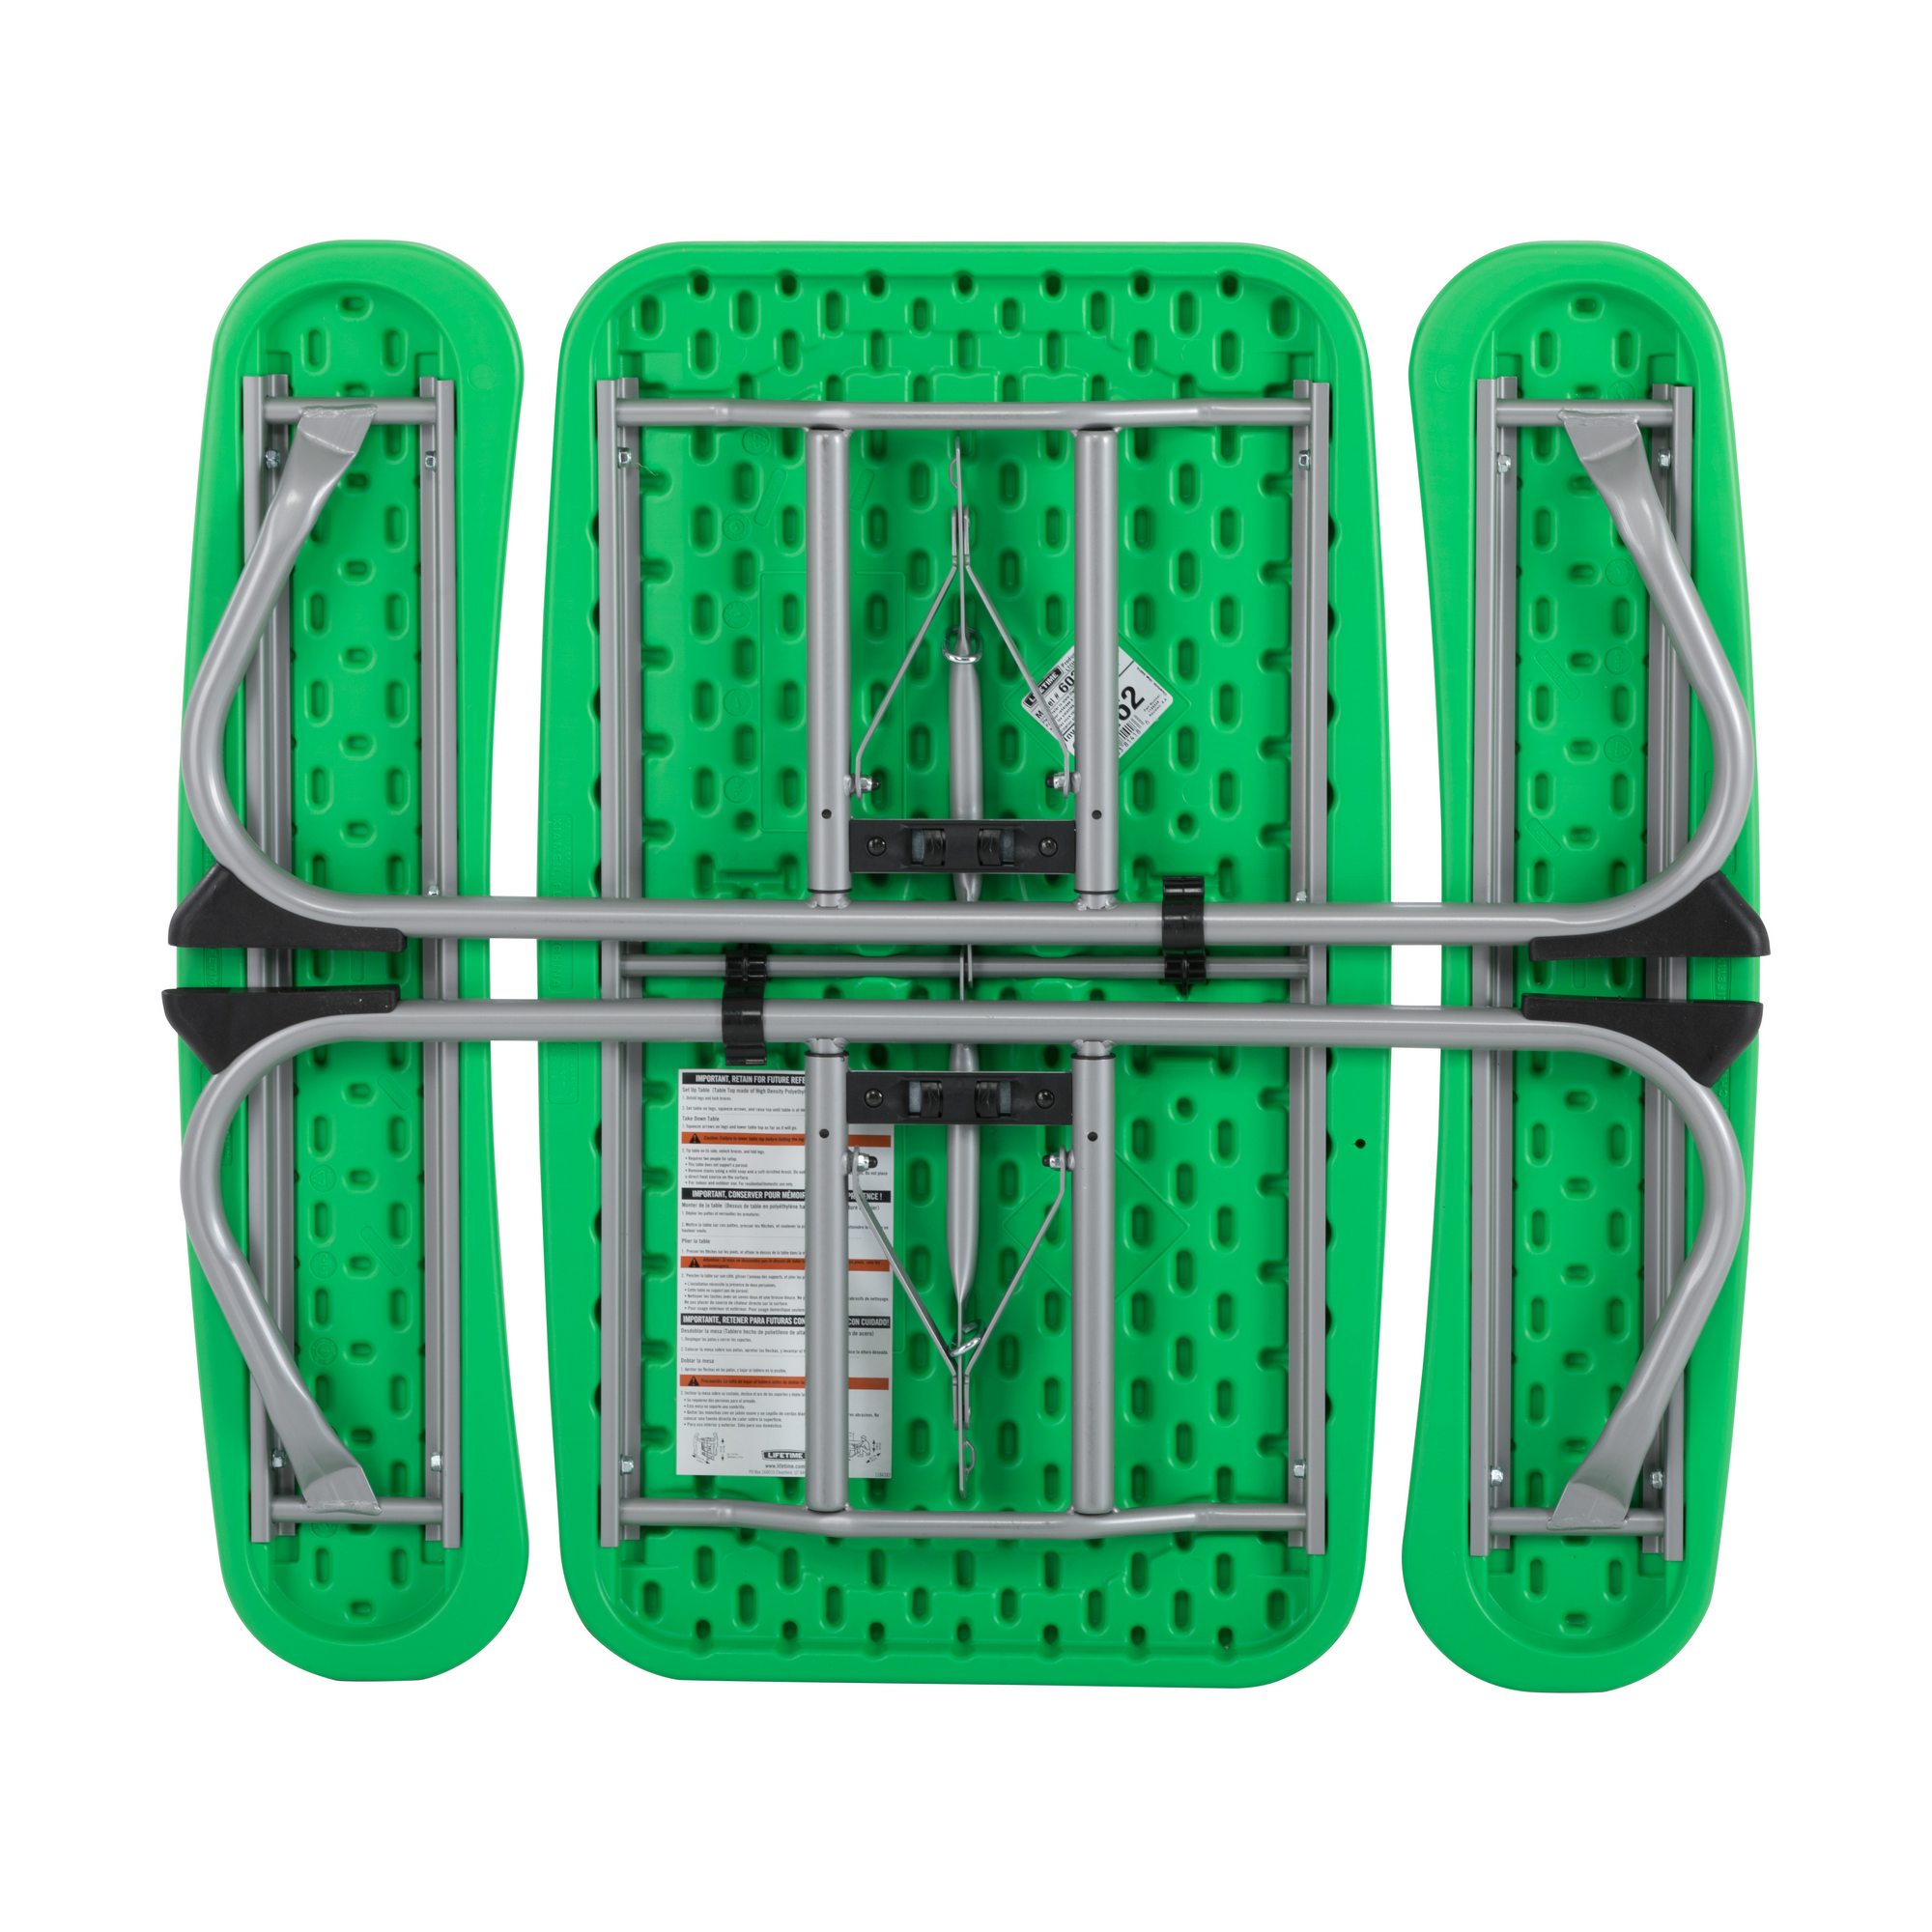 Picknickgarnitur grün für Kinder 83 x 90 x 54 cm + product picture